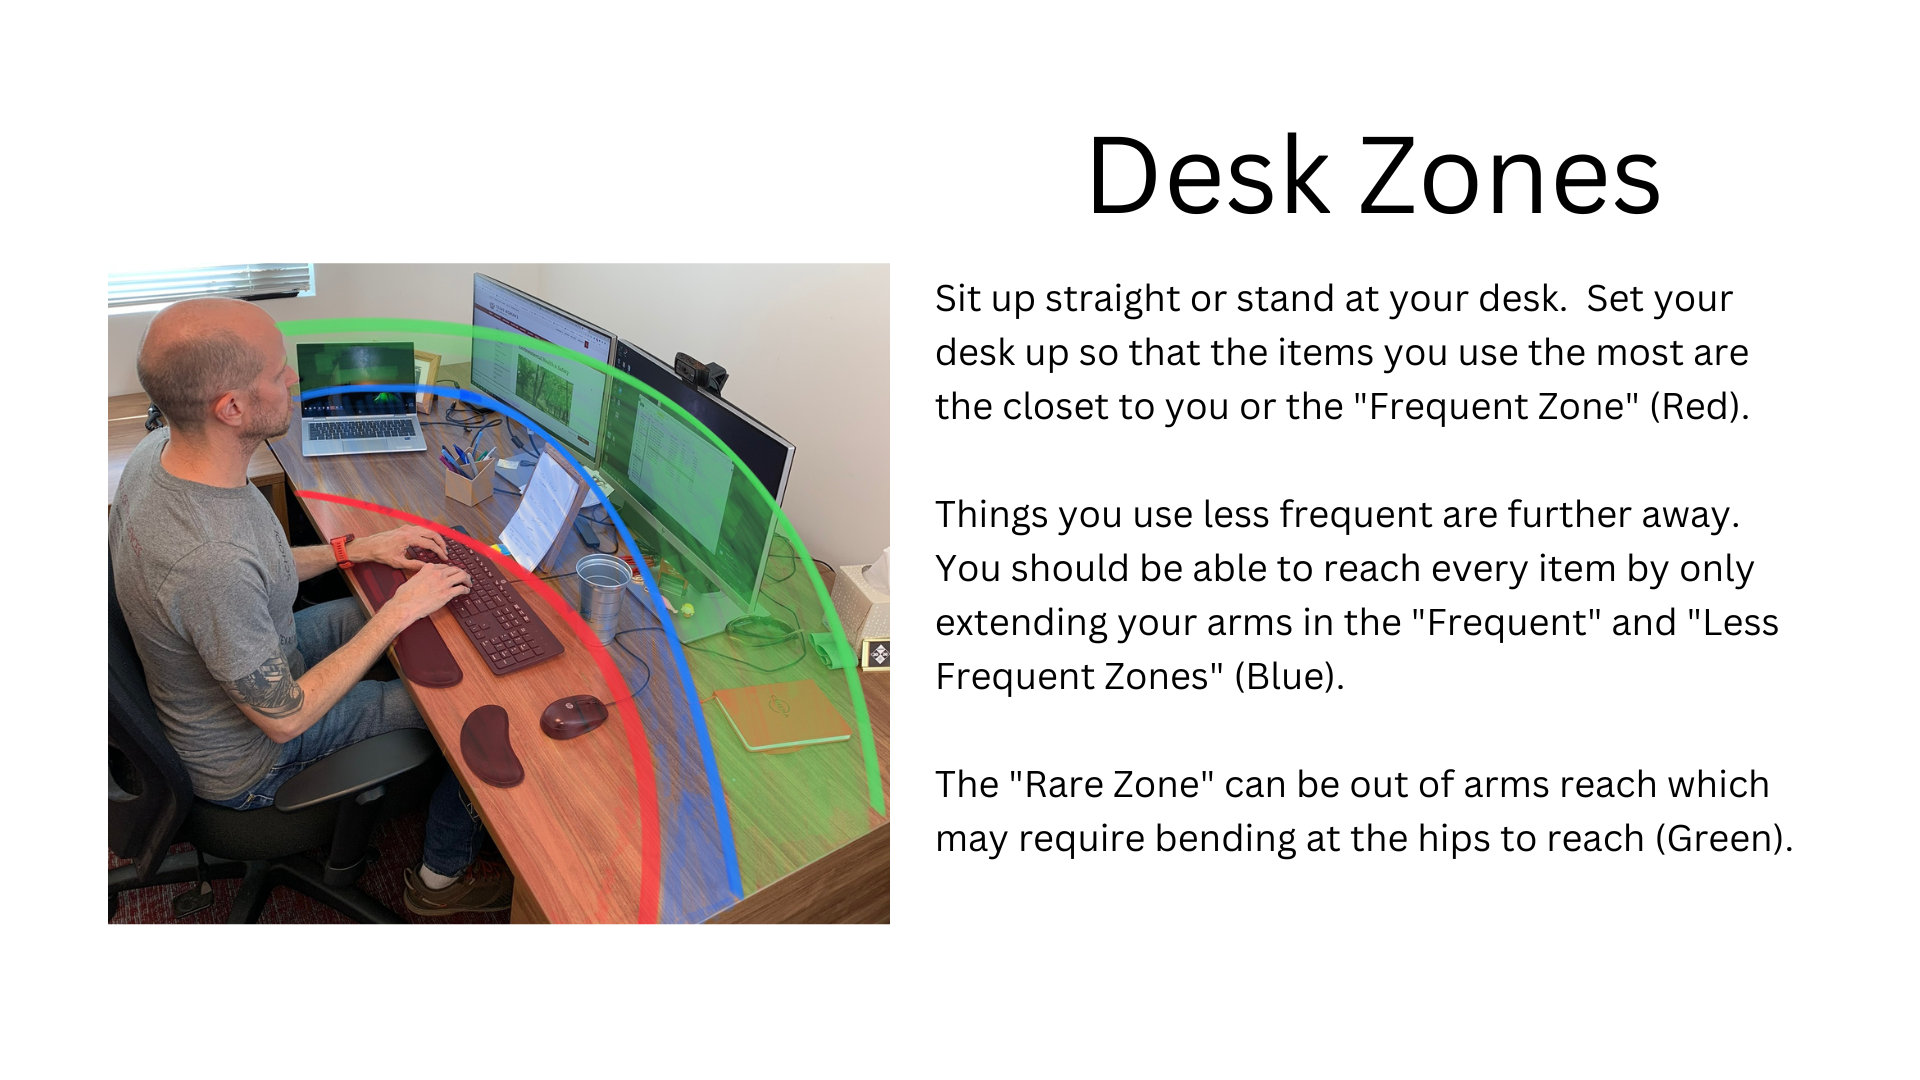 Infographic describing how to properly use desk zones for optimal ergonomics.